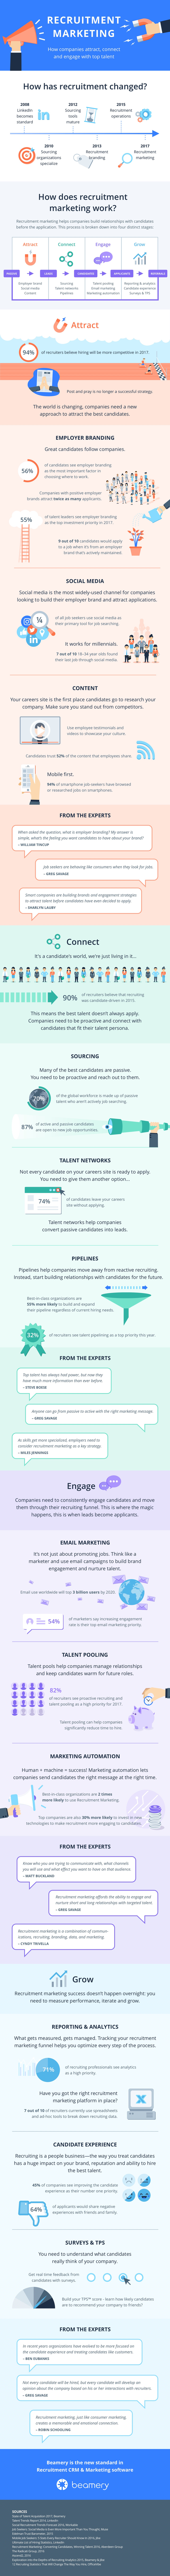 recruitment-marketing-infographic